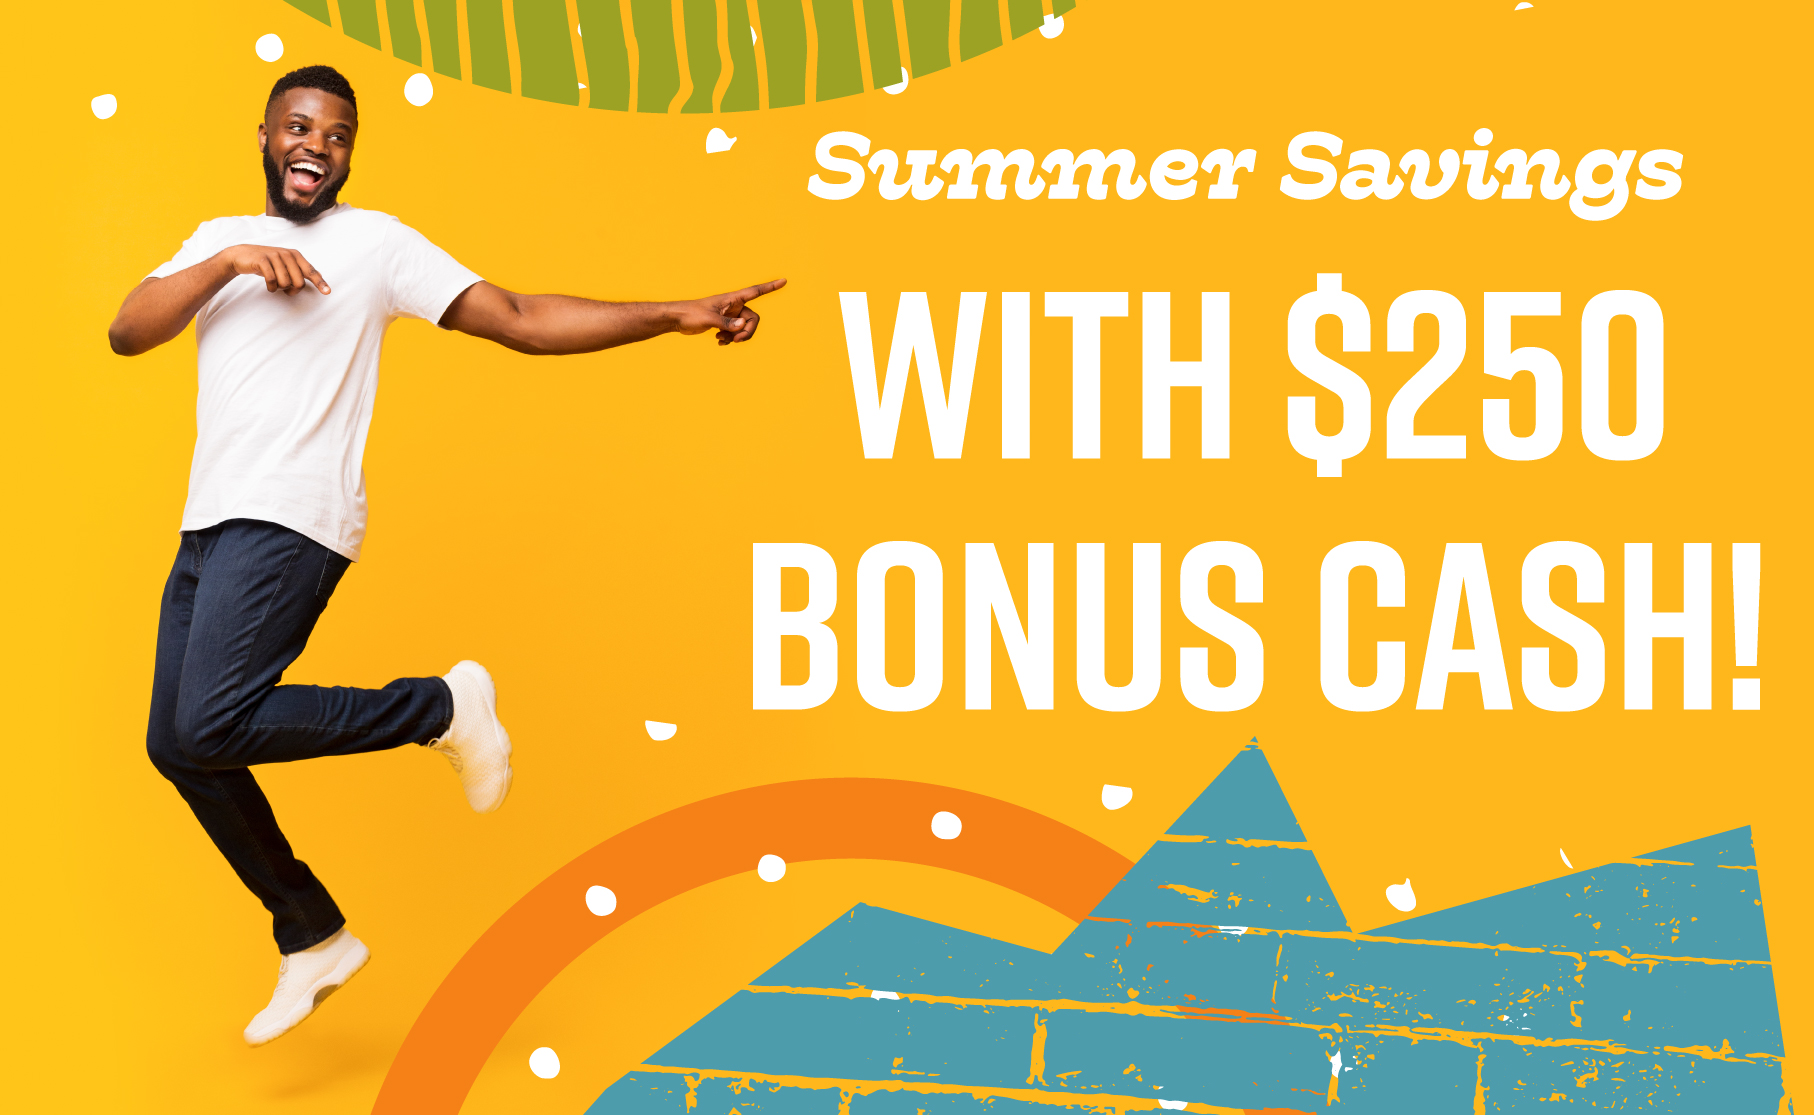 Summer Savings with $250 Bonus Cash